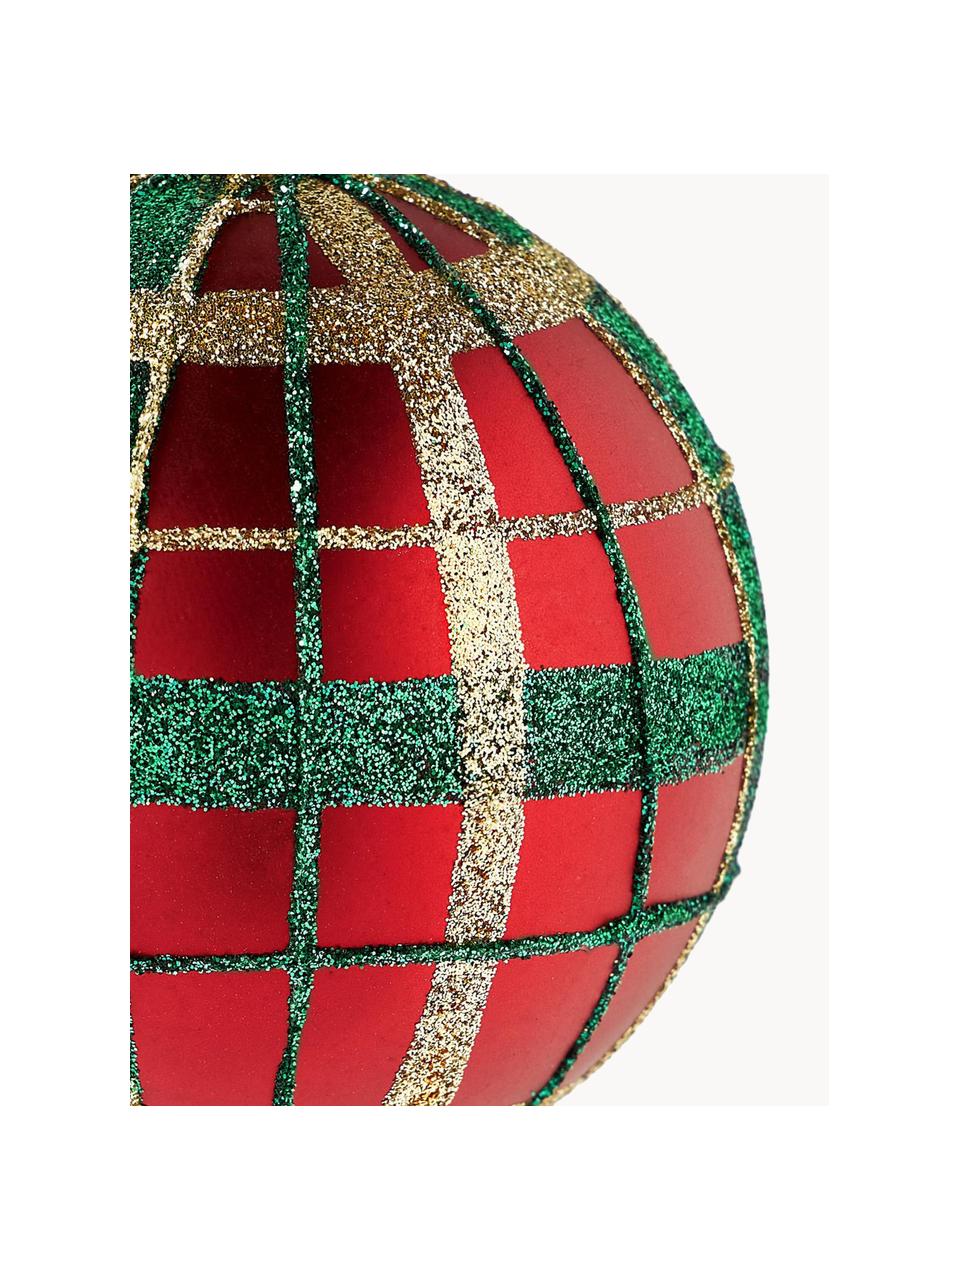 Palline di Natale infrangibile Karo 12 pz, Plastica, Rosso, verde, dorato, Ø 8 cm